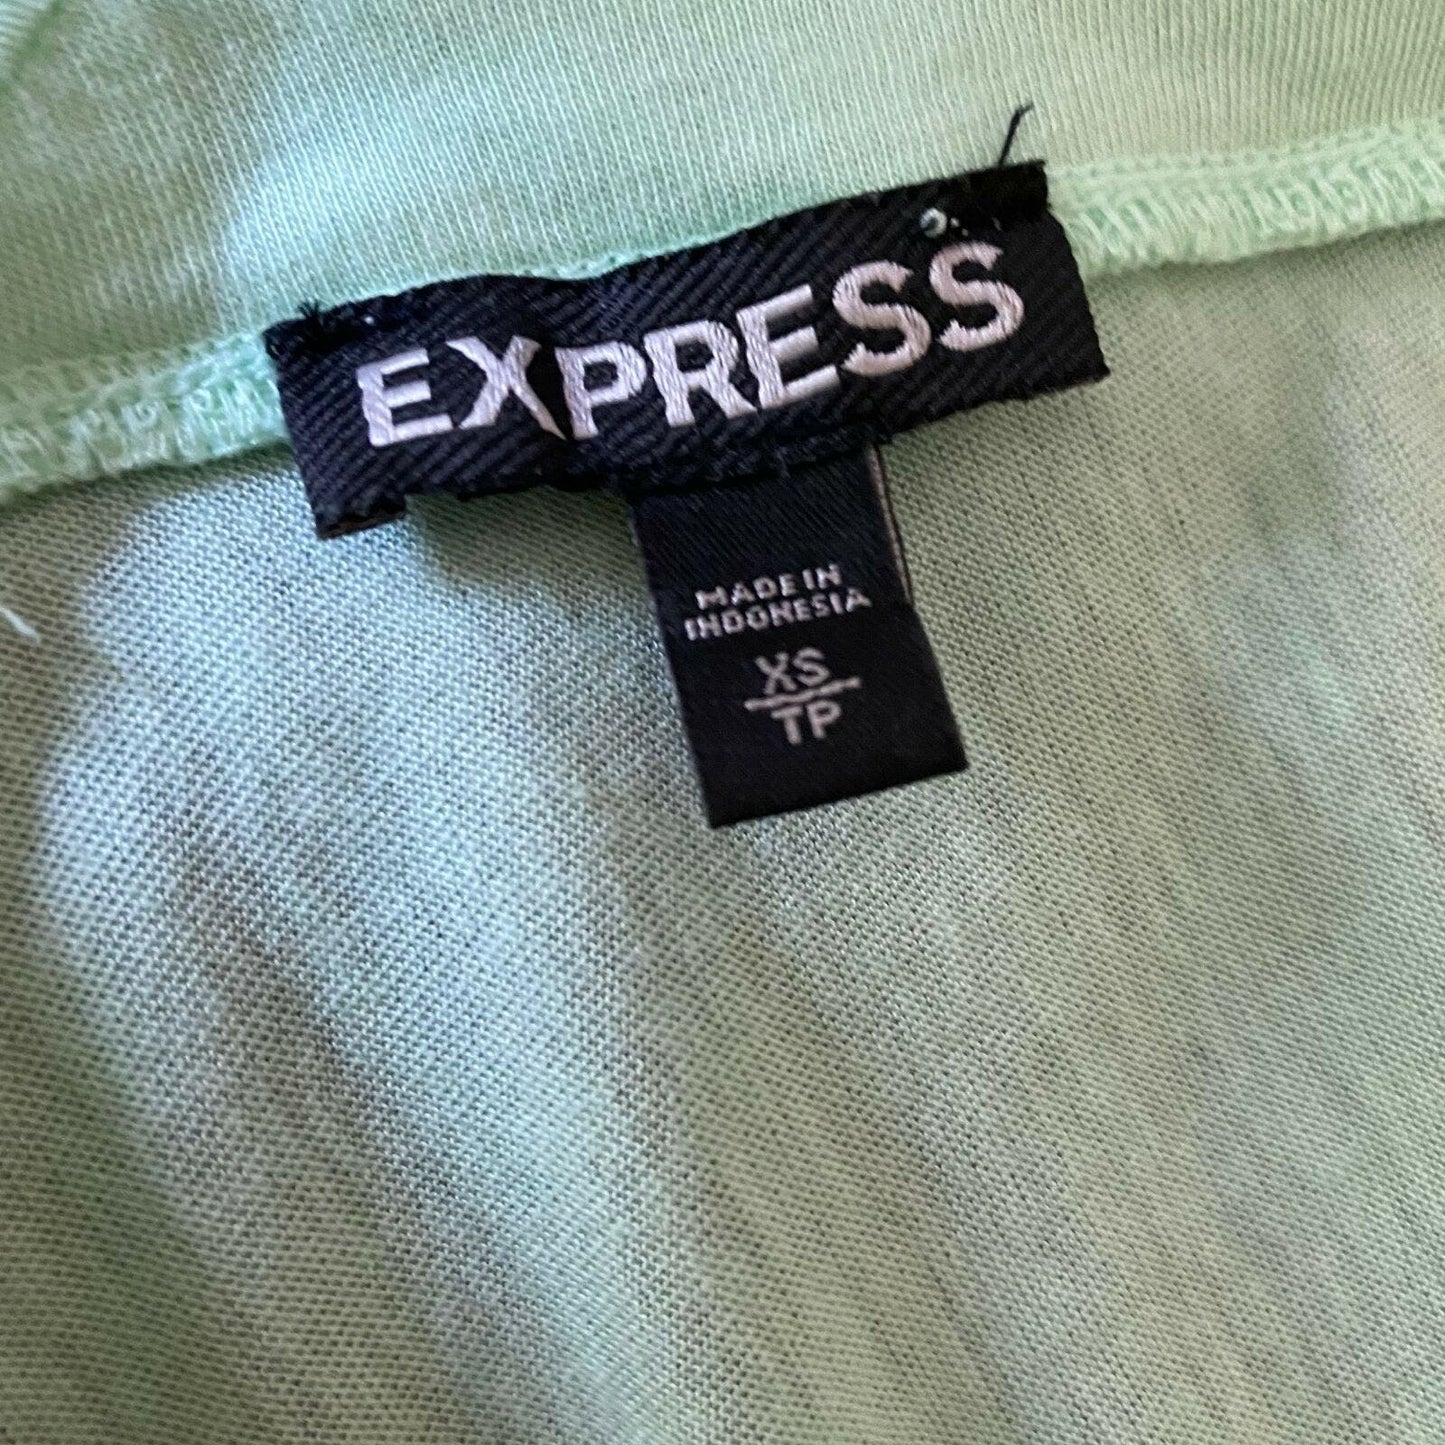 Express sz XS 3/4 sleeve V neck block color blouse shirt